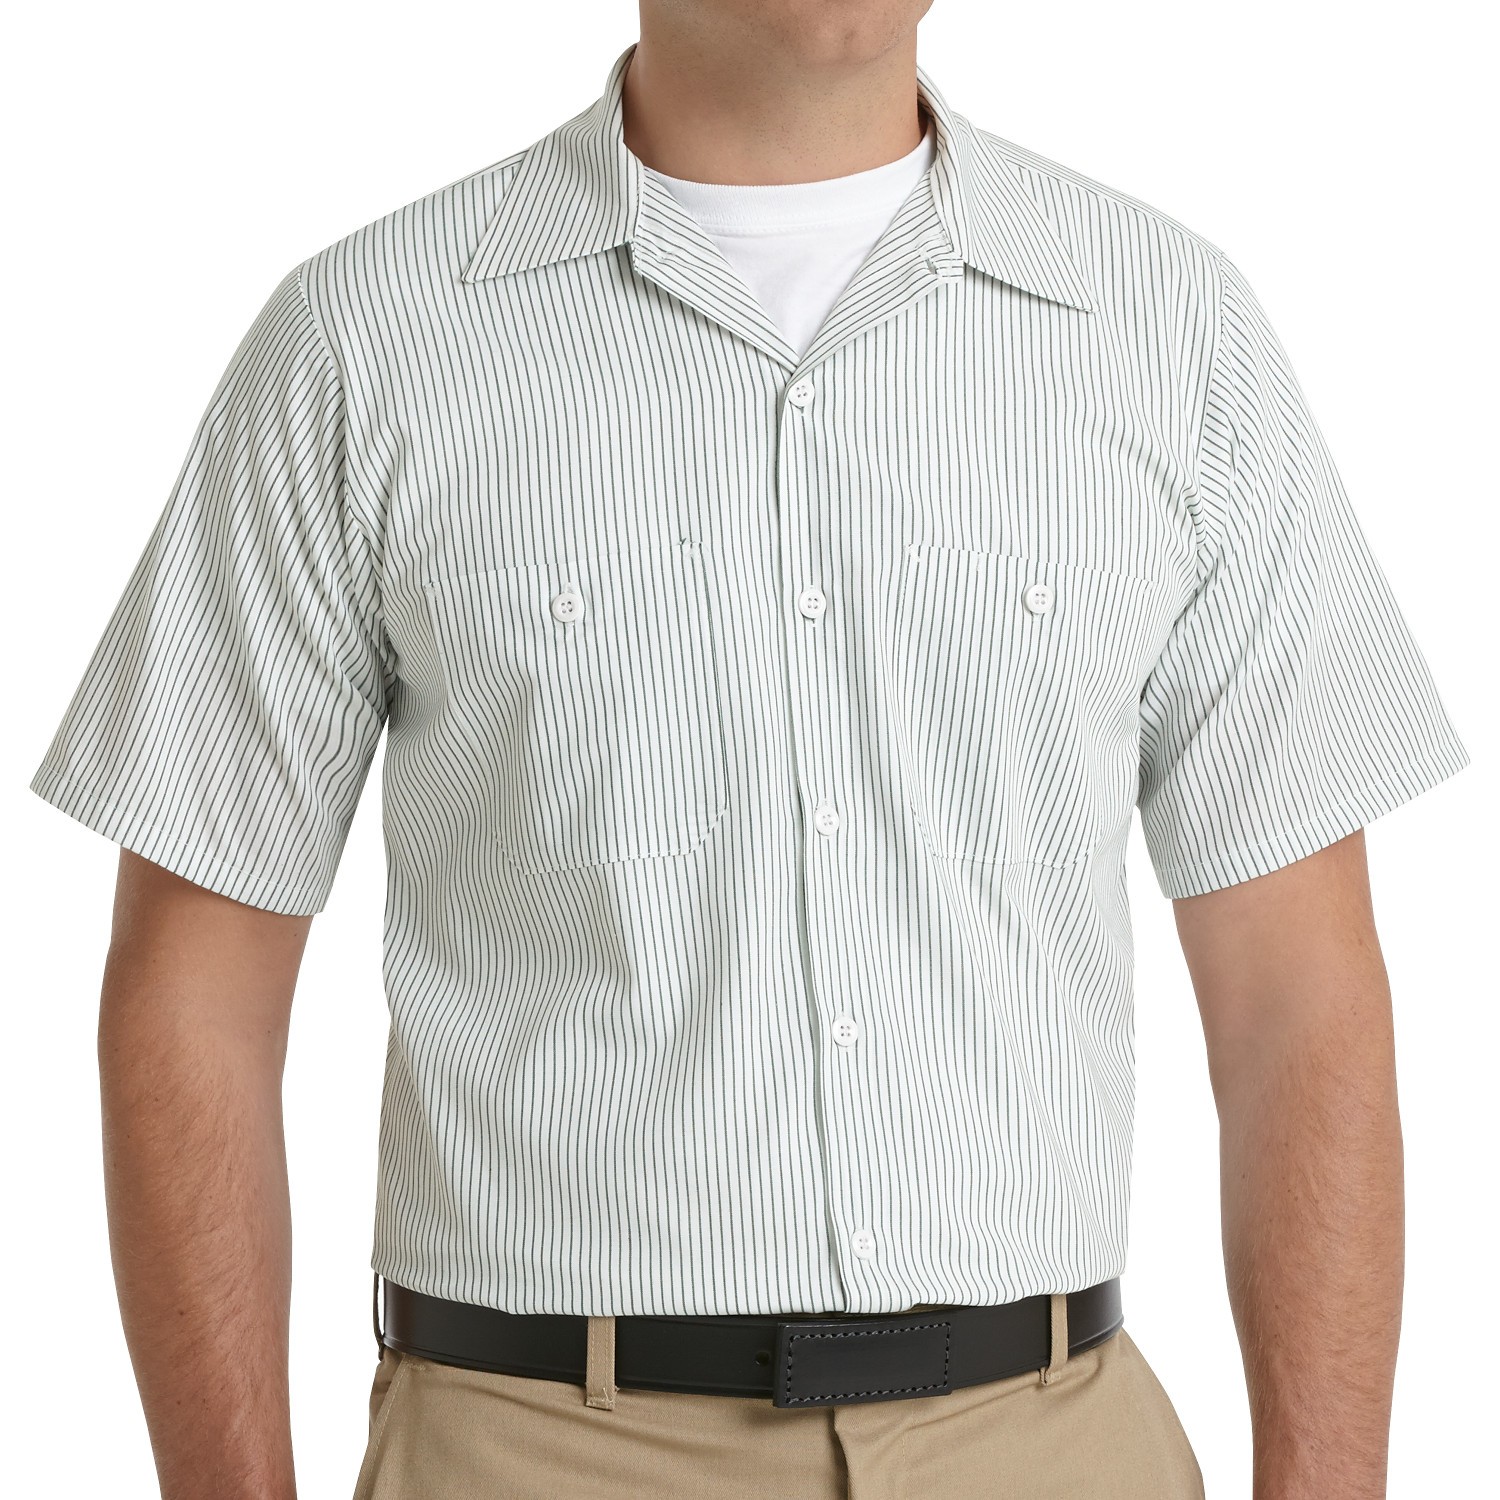 NEW MEDIUM Short Sleeve Charcoal White Stripe WORK SHIRT Uniform SP20CW 1st qlty 